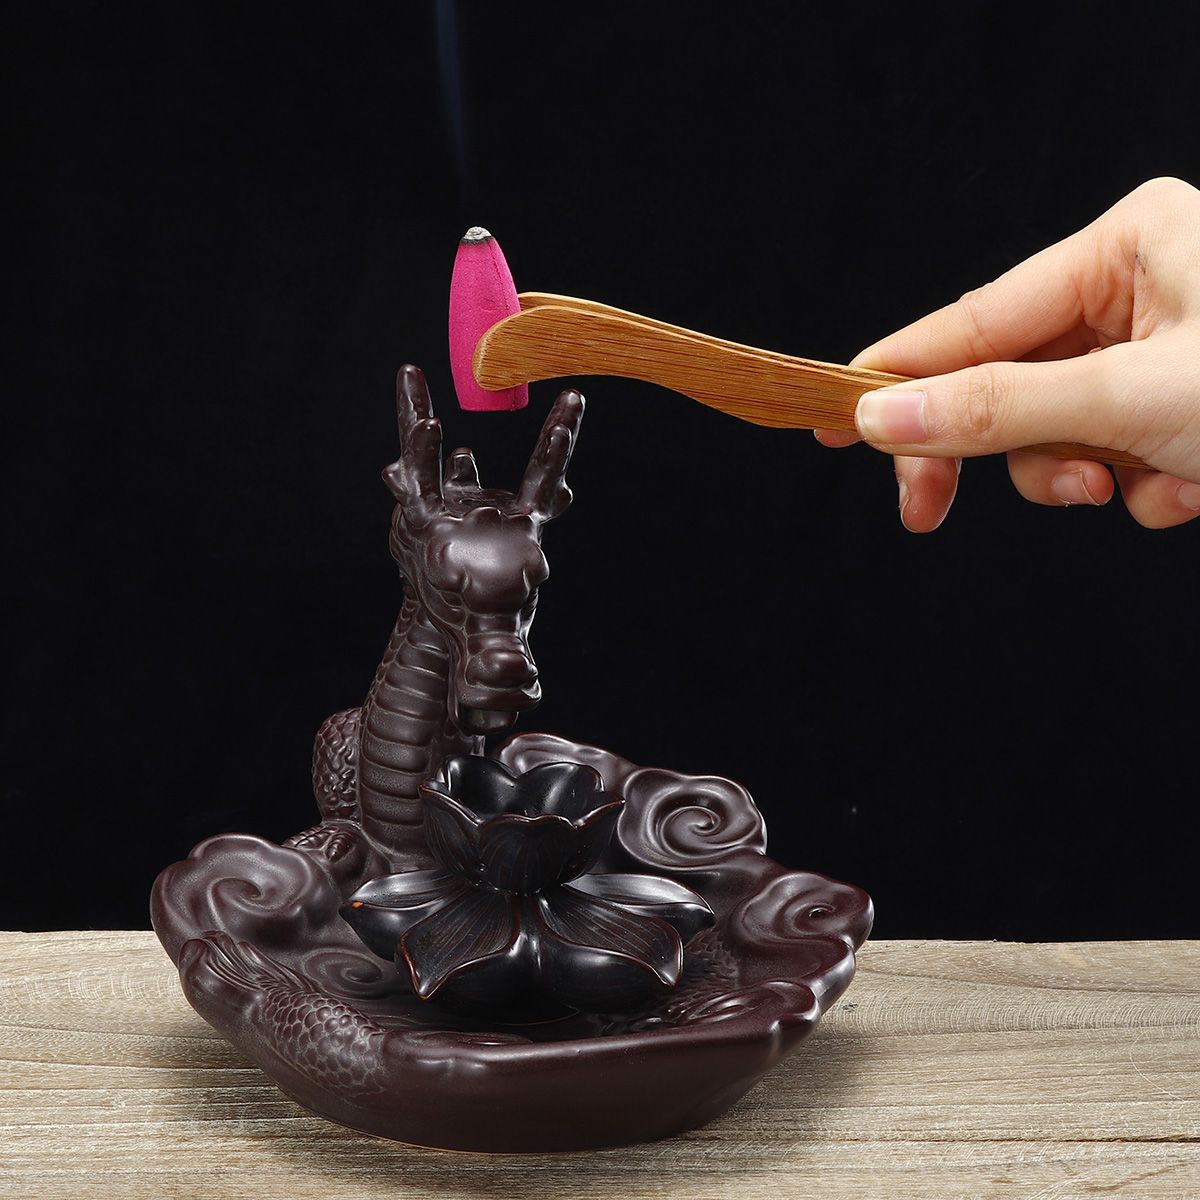 Dragon-Smog-Ceramic-Incense-Burner-Tea-Ceremony-With-Gift-Box-and-10pcs-Cones-1407760